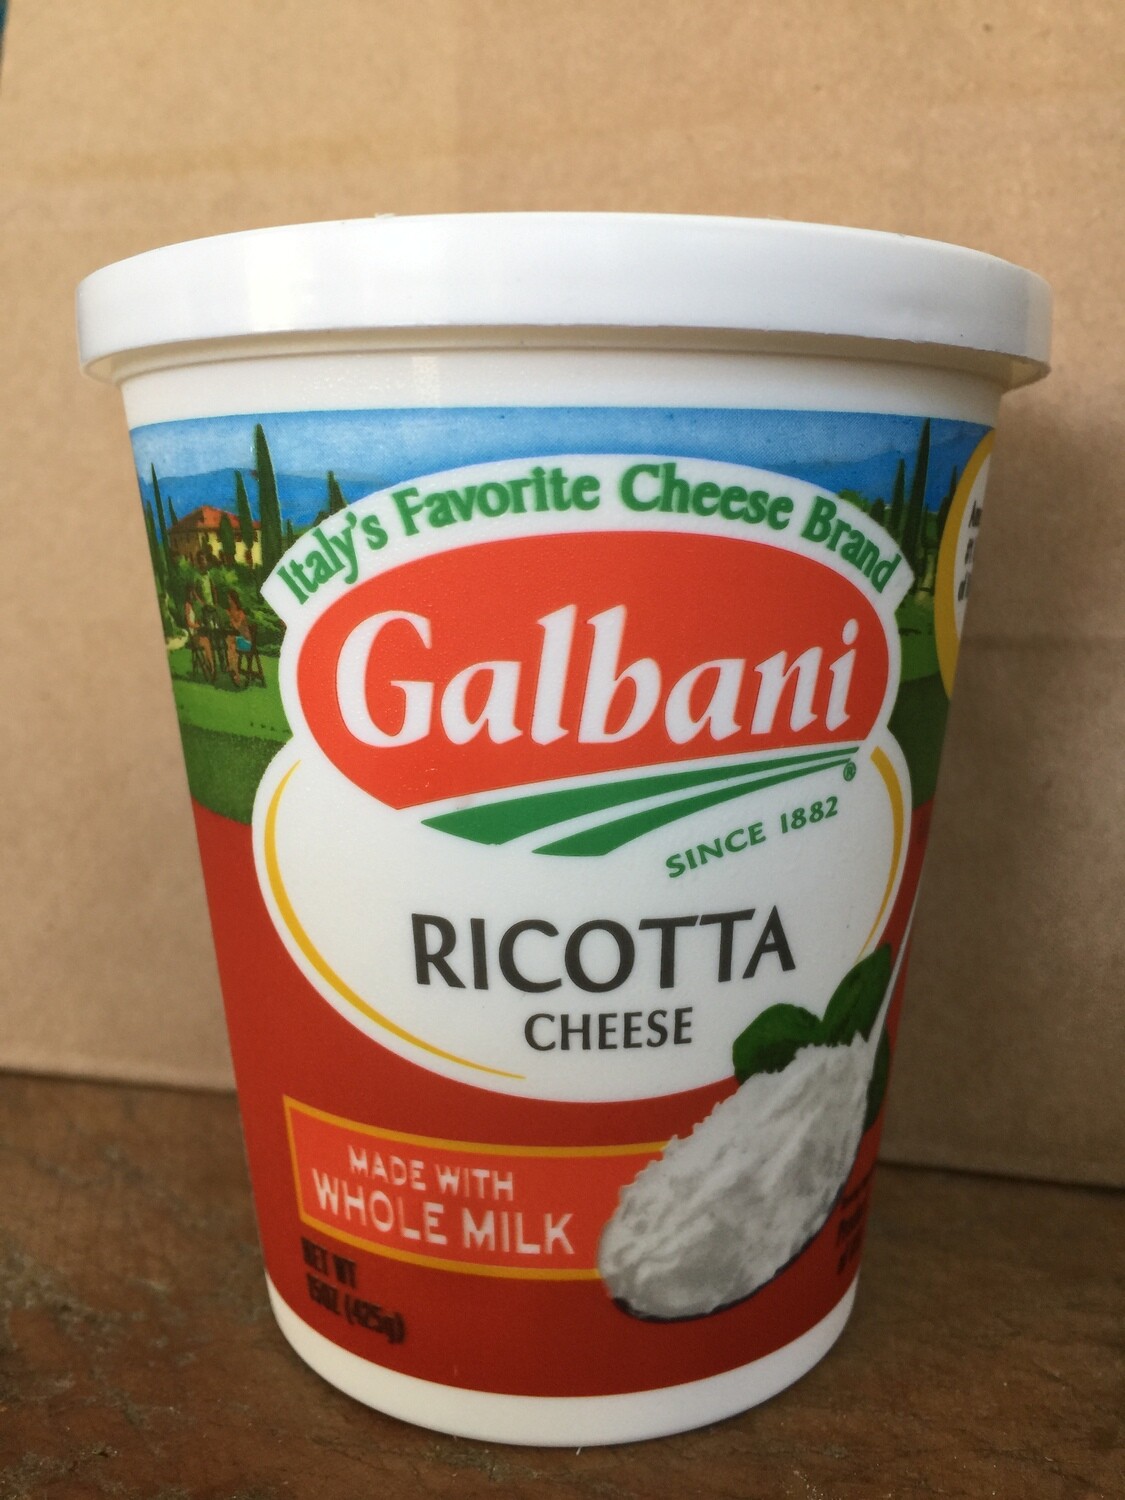 Deli / Cheese / Galbani Ricotta Whole Milk, 15 oz